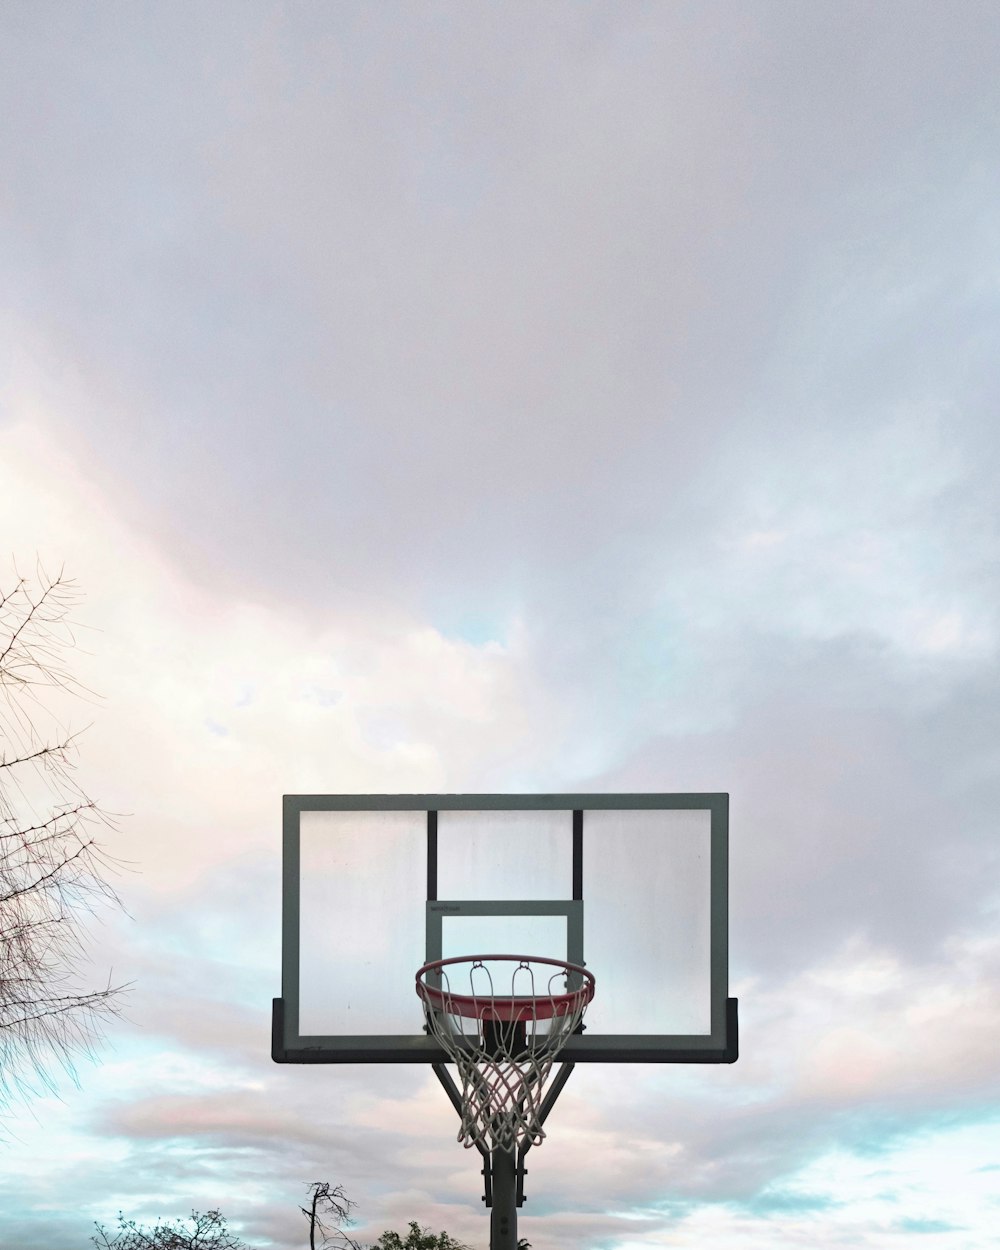 black basketball hoop under white clouds